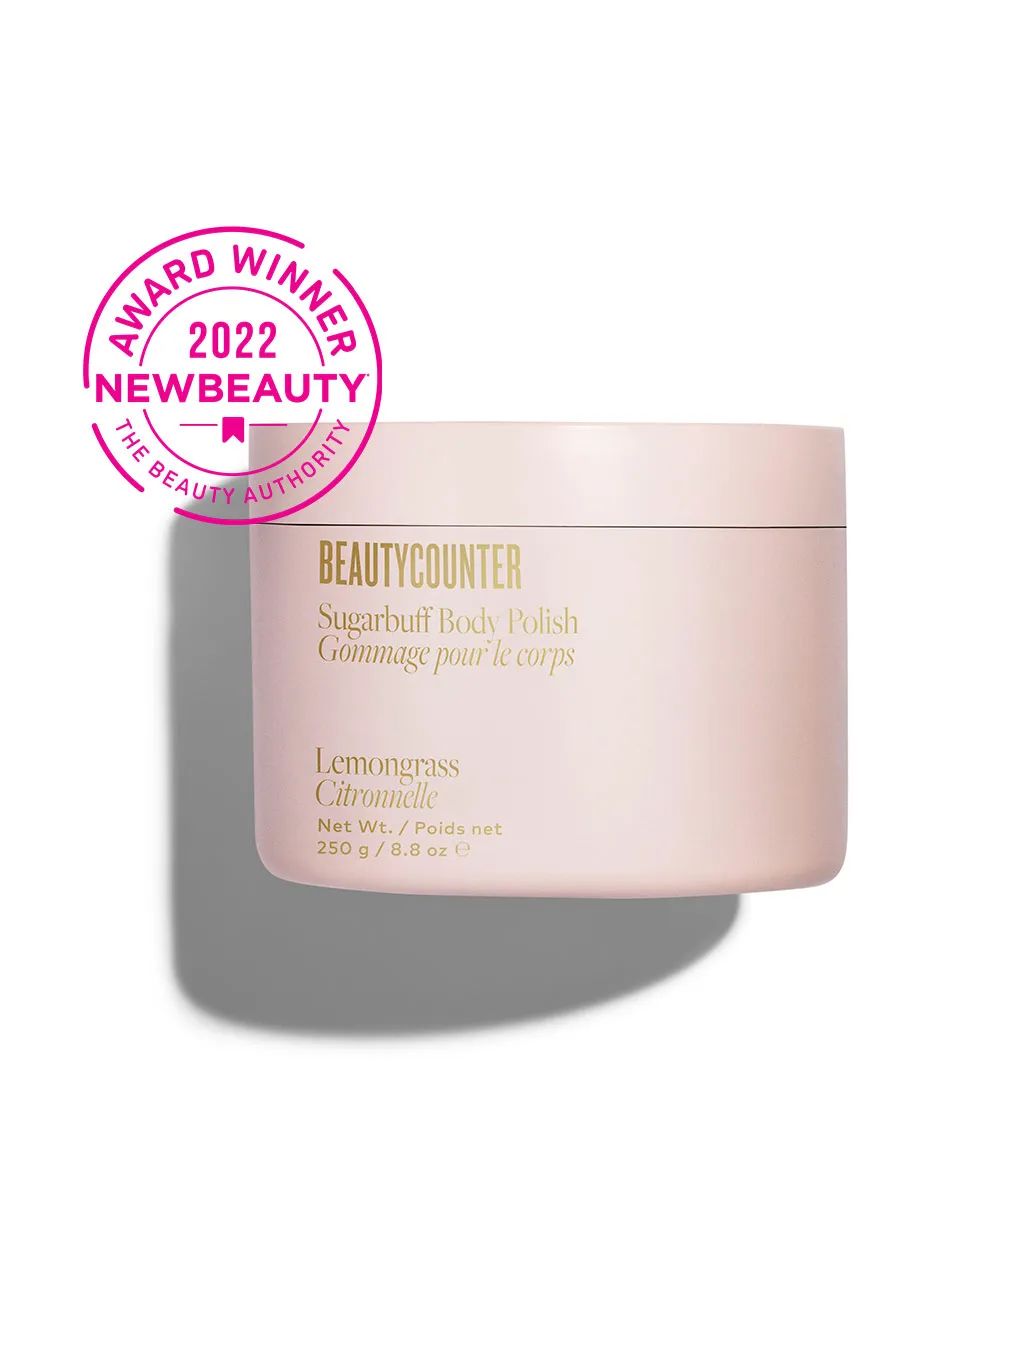 Sugarbuff Body Polish in Lemongrass - Beautycounter - Skin Care, Makeup, Bath and Body and more! | Beautycounter.com